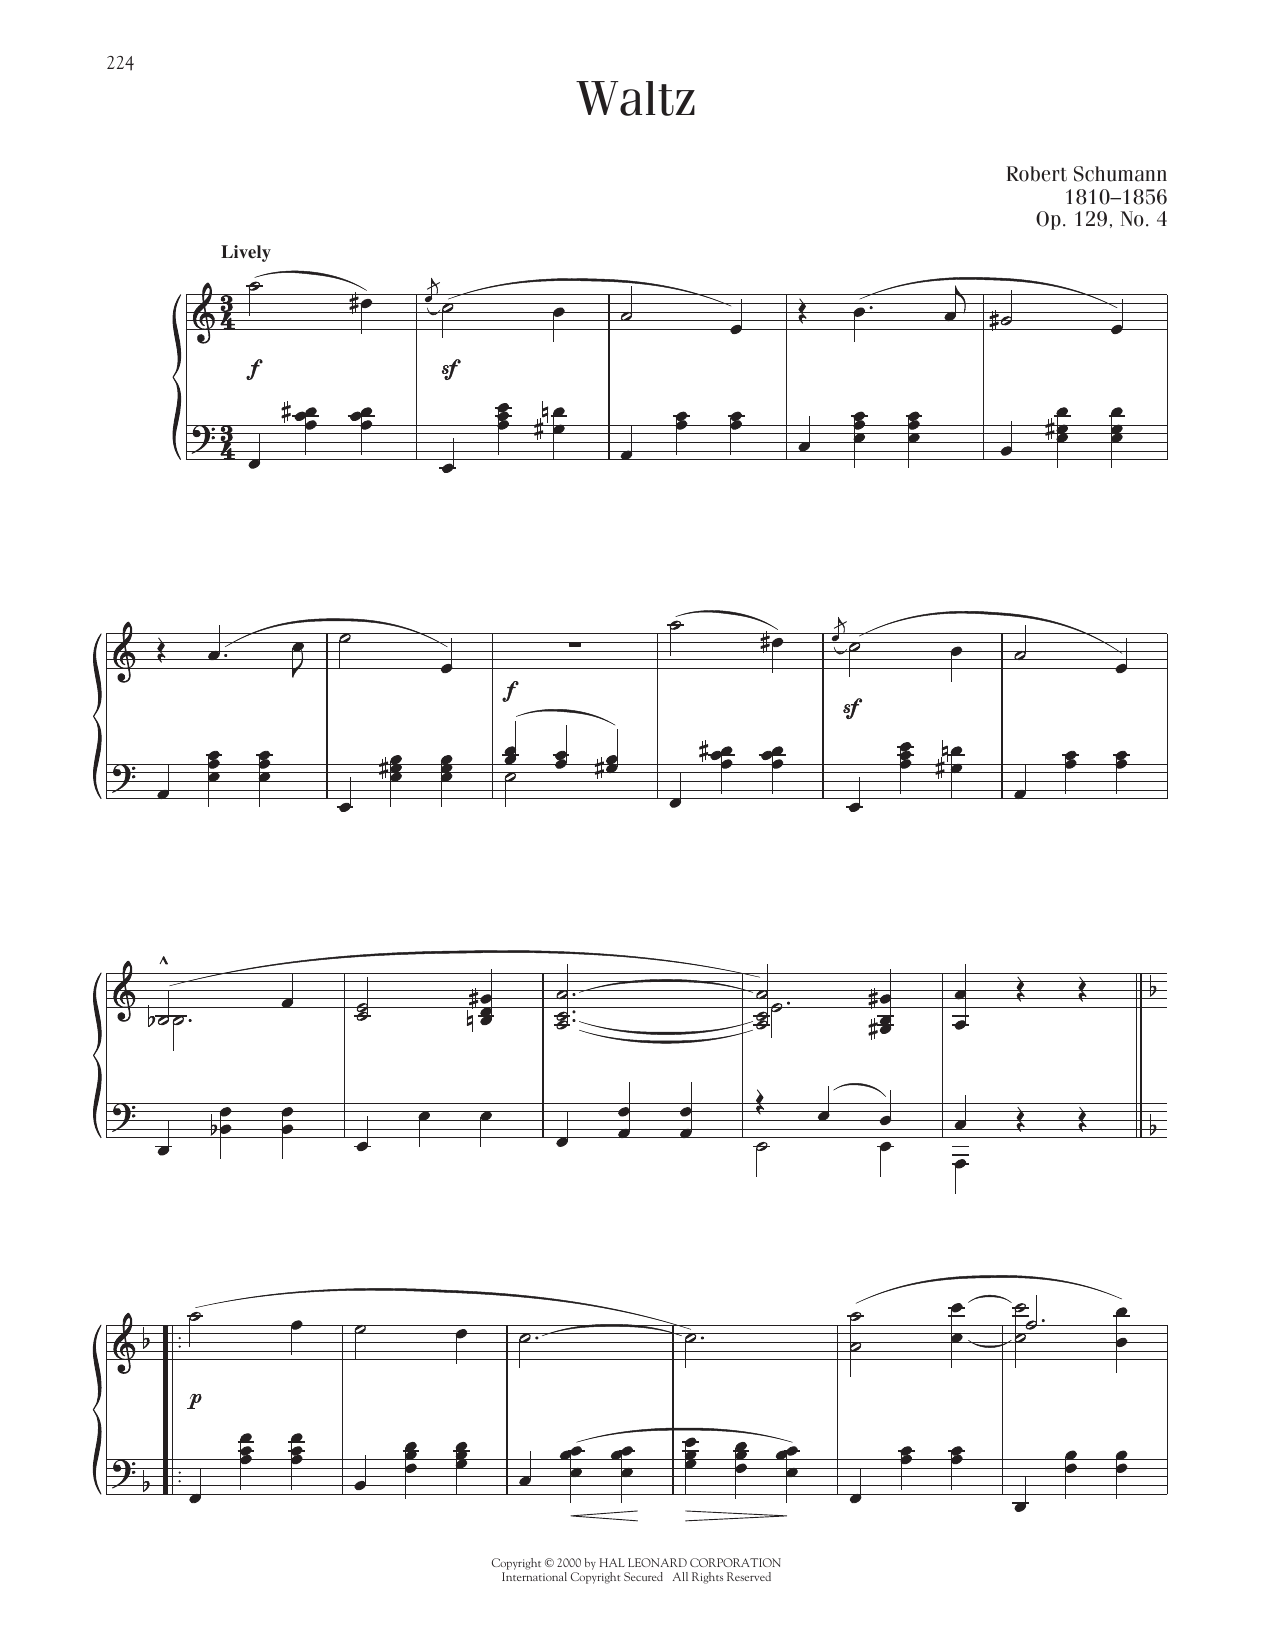 Robert Schumann Waltz In A Minor sheet music notes printable PDF score